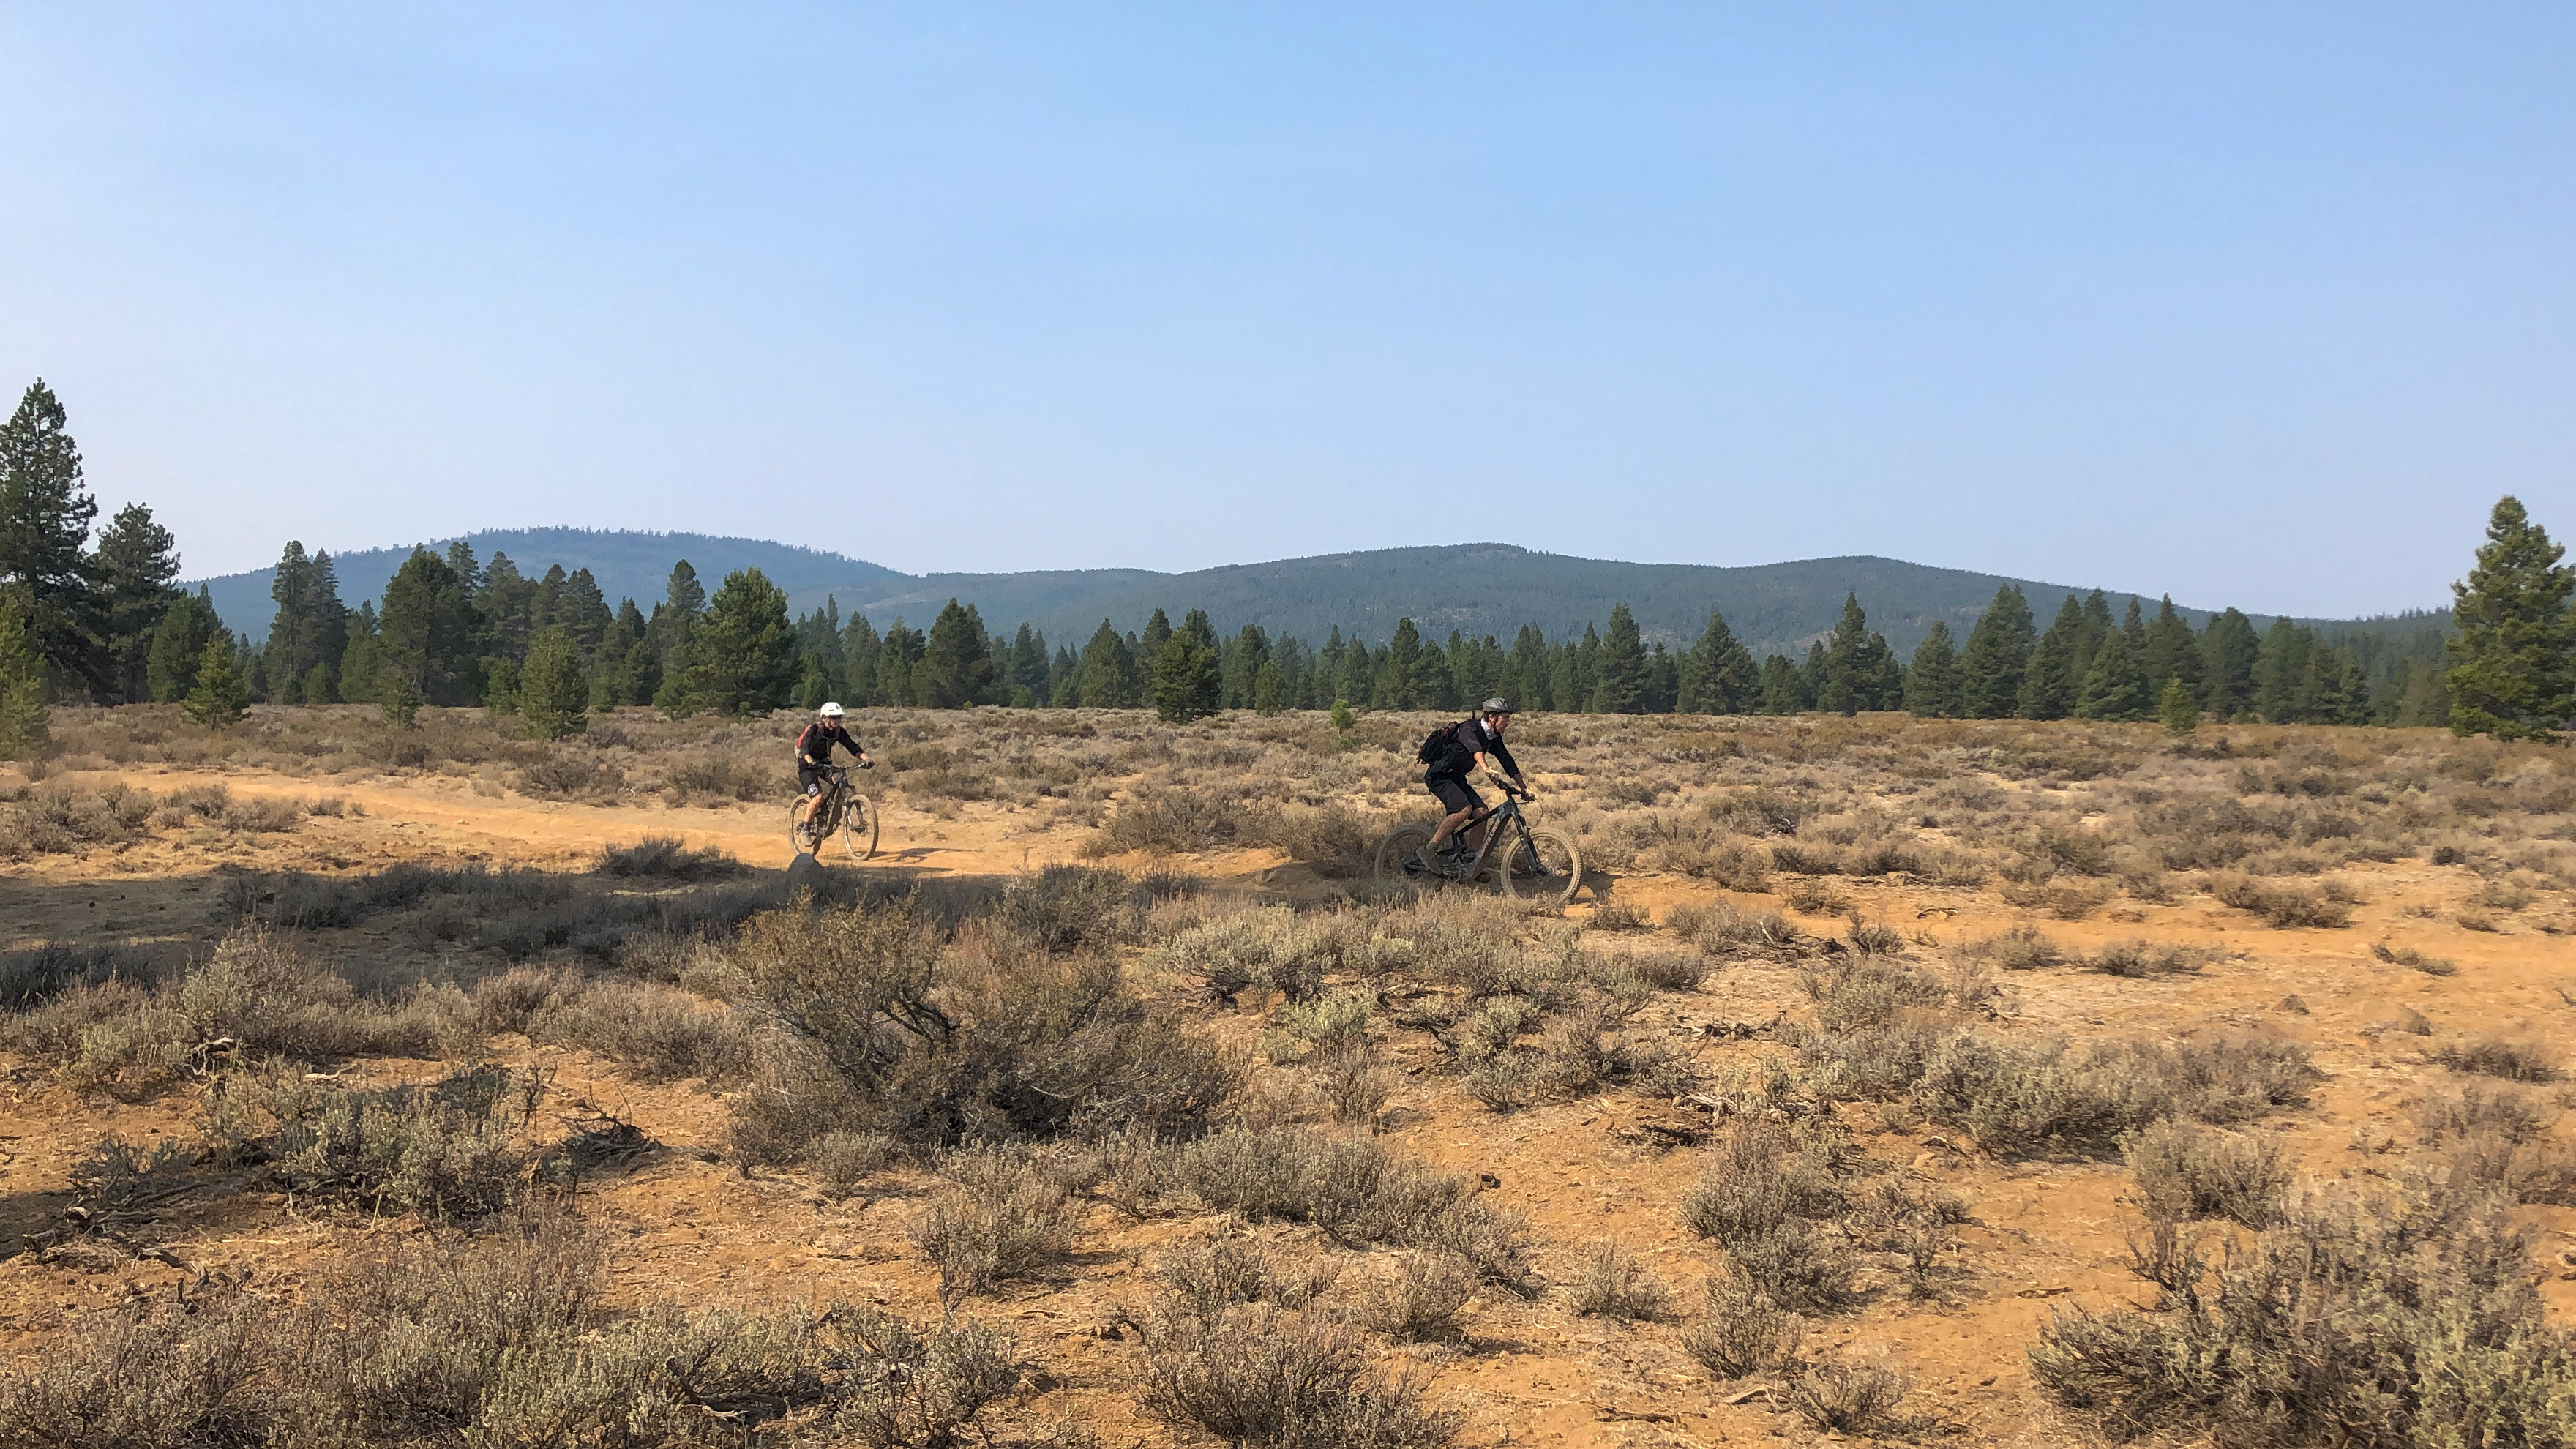 Two mountain bikers in a high desert landscape.